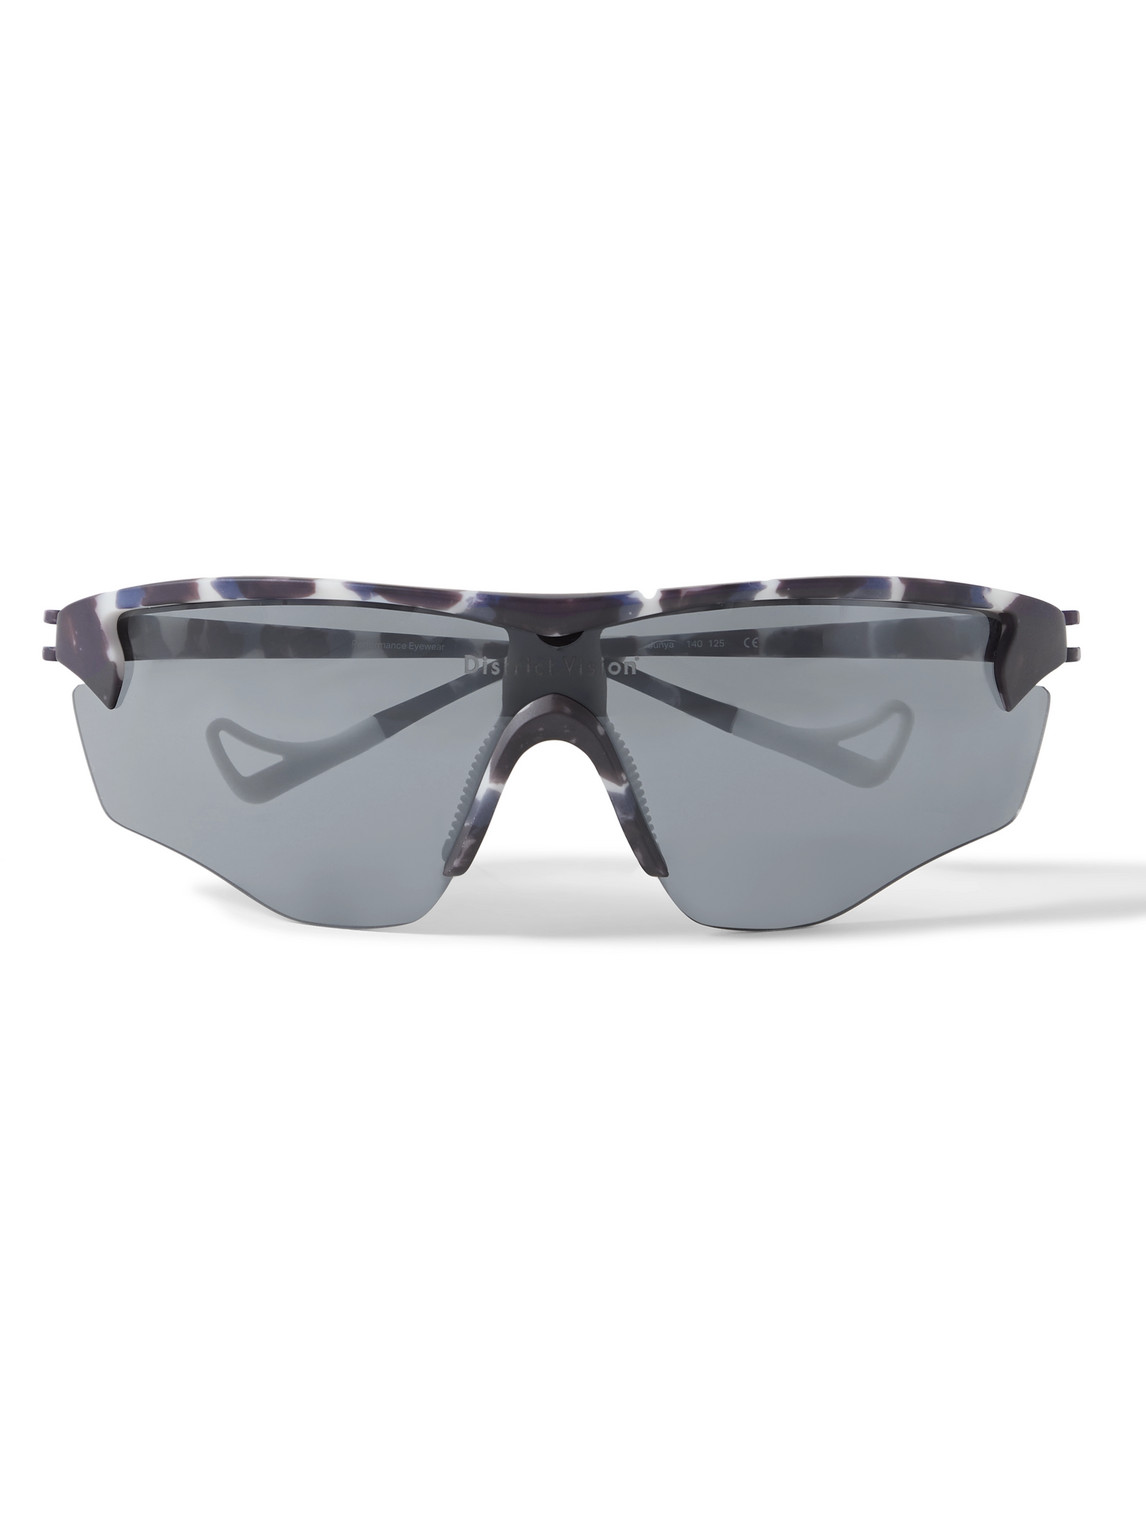 District Vision Koharu Eclipse D-frame Polycarbonate Sunglasses In Black